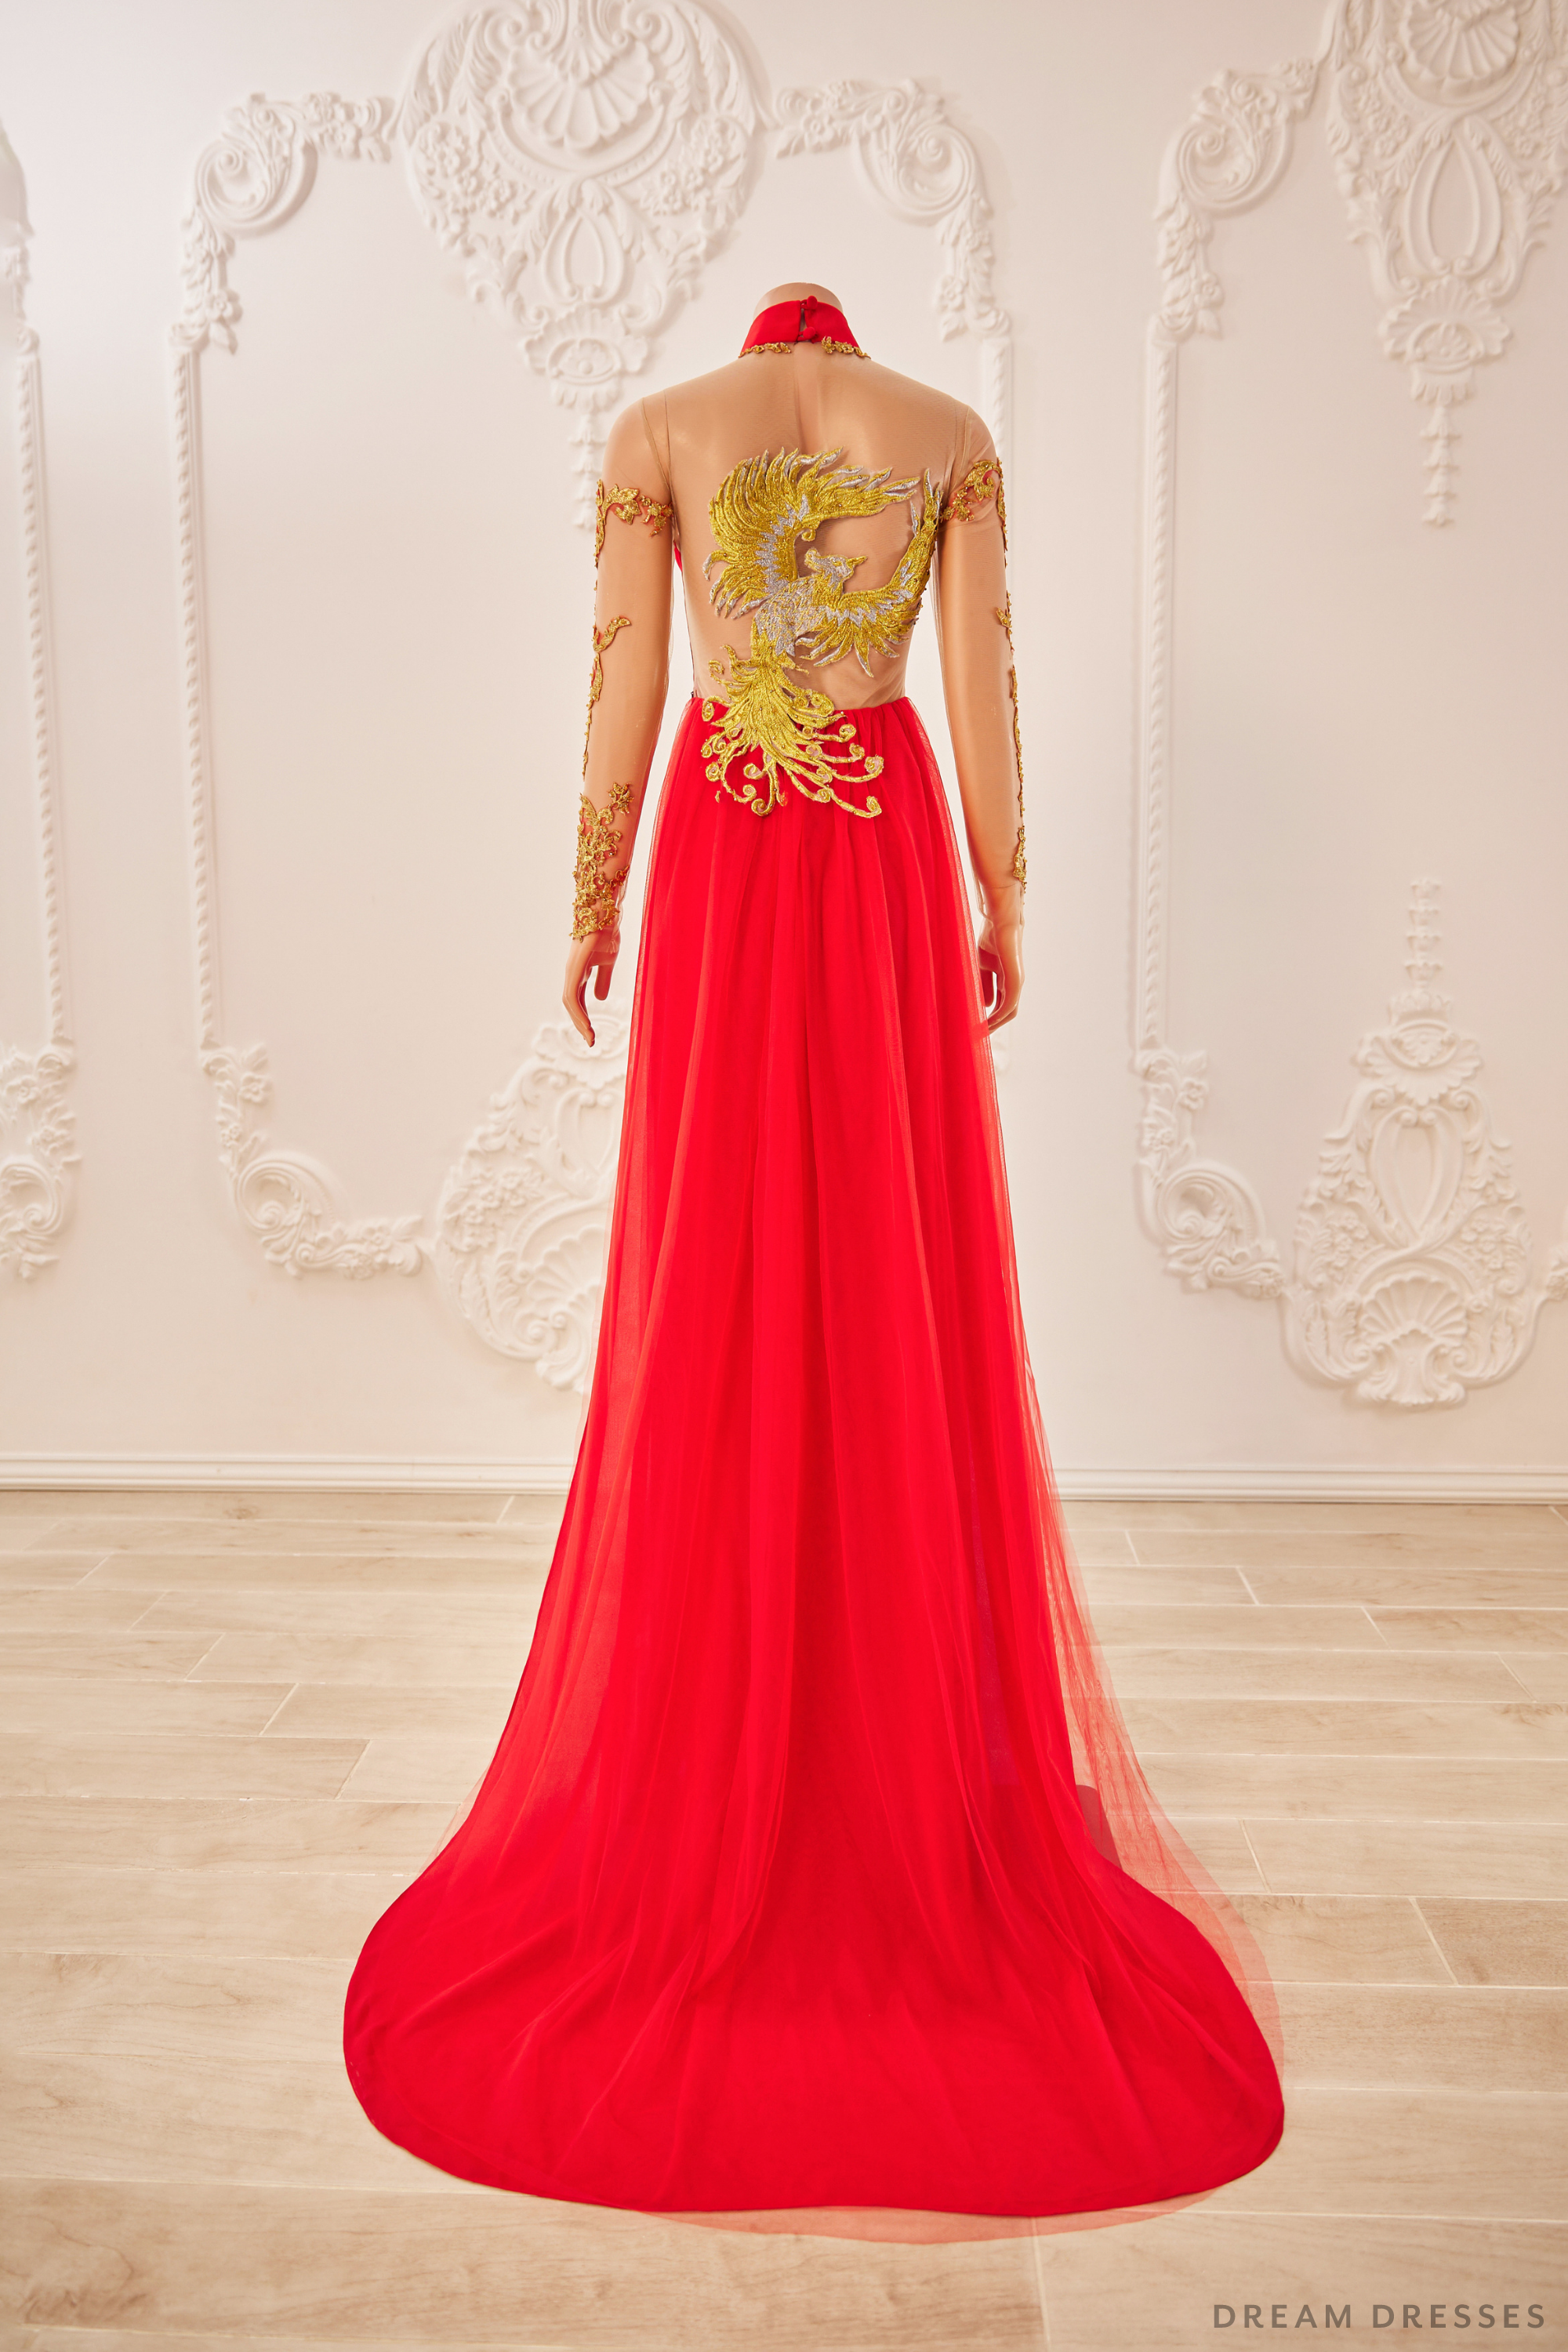 Red Bridal Ao Dai with Gold Lace | Vietnamese Bridal Dress (#LIANA)